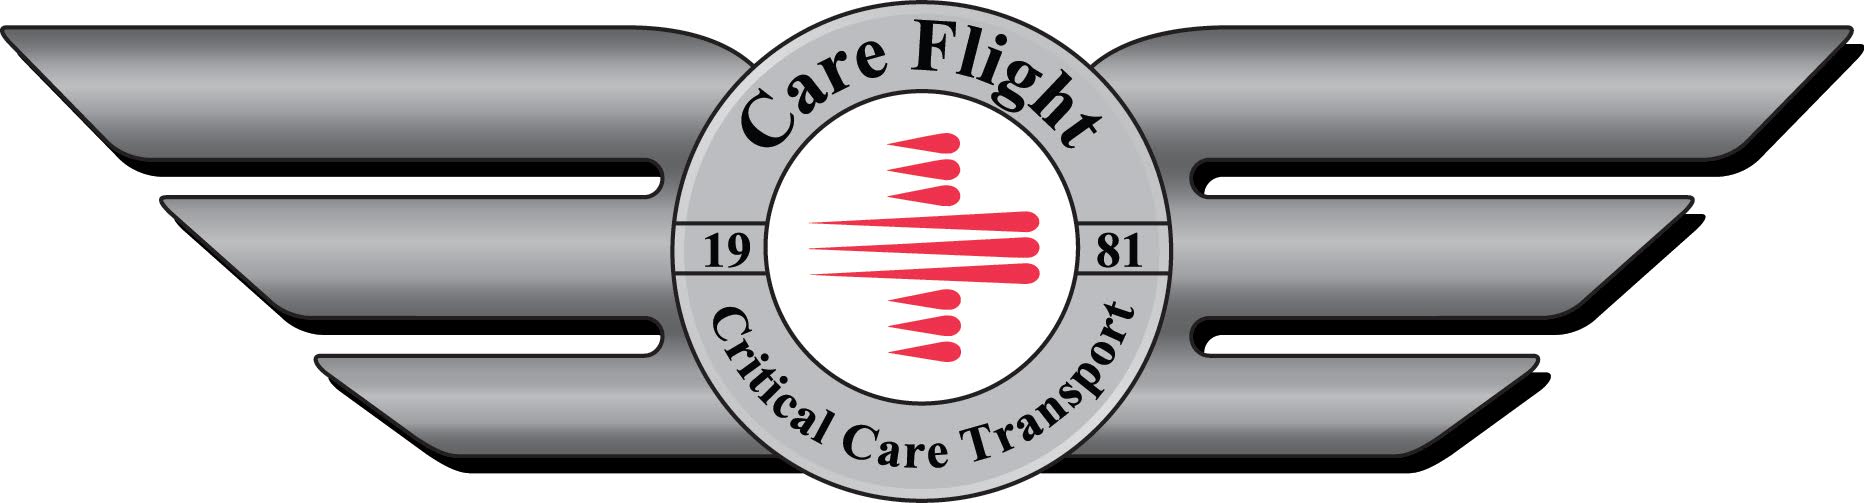 Flight Nurse Logo - Care Flight Nurse in Reno, Nevada | Air Medical Jobs